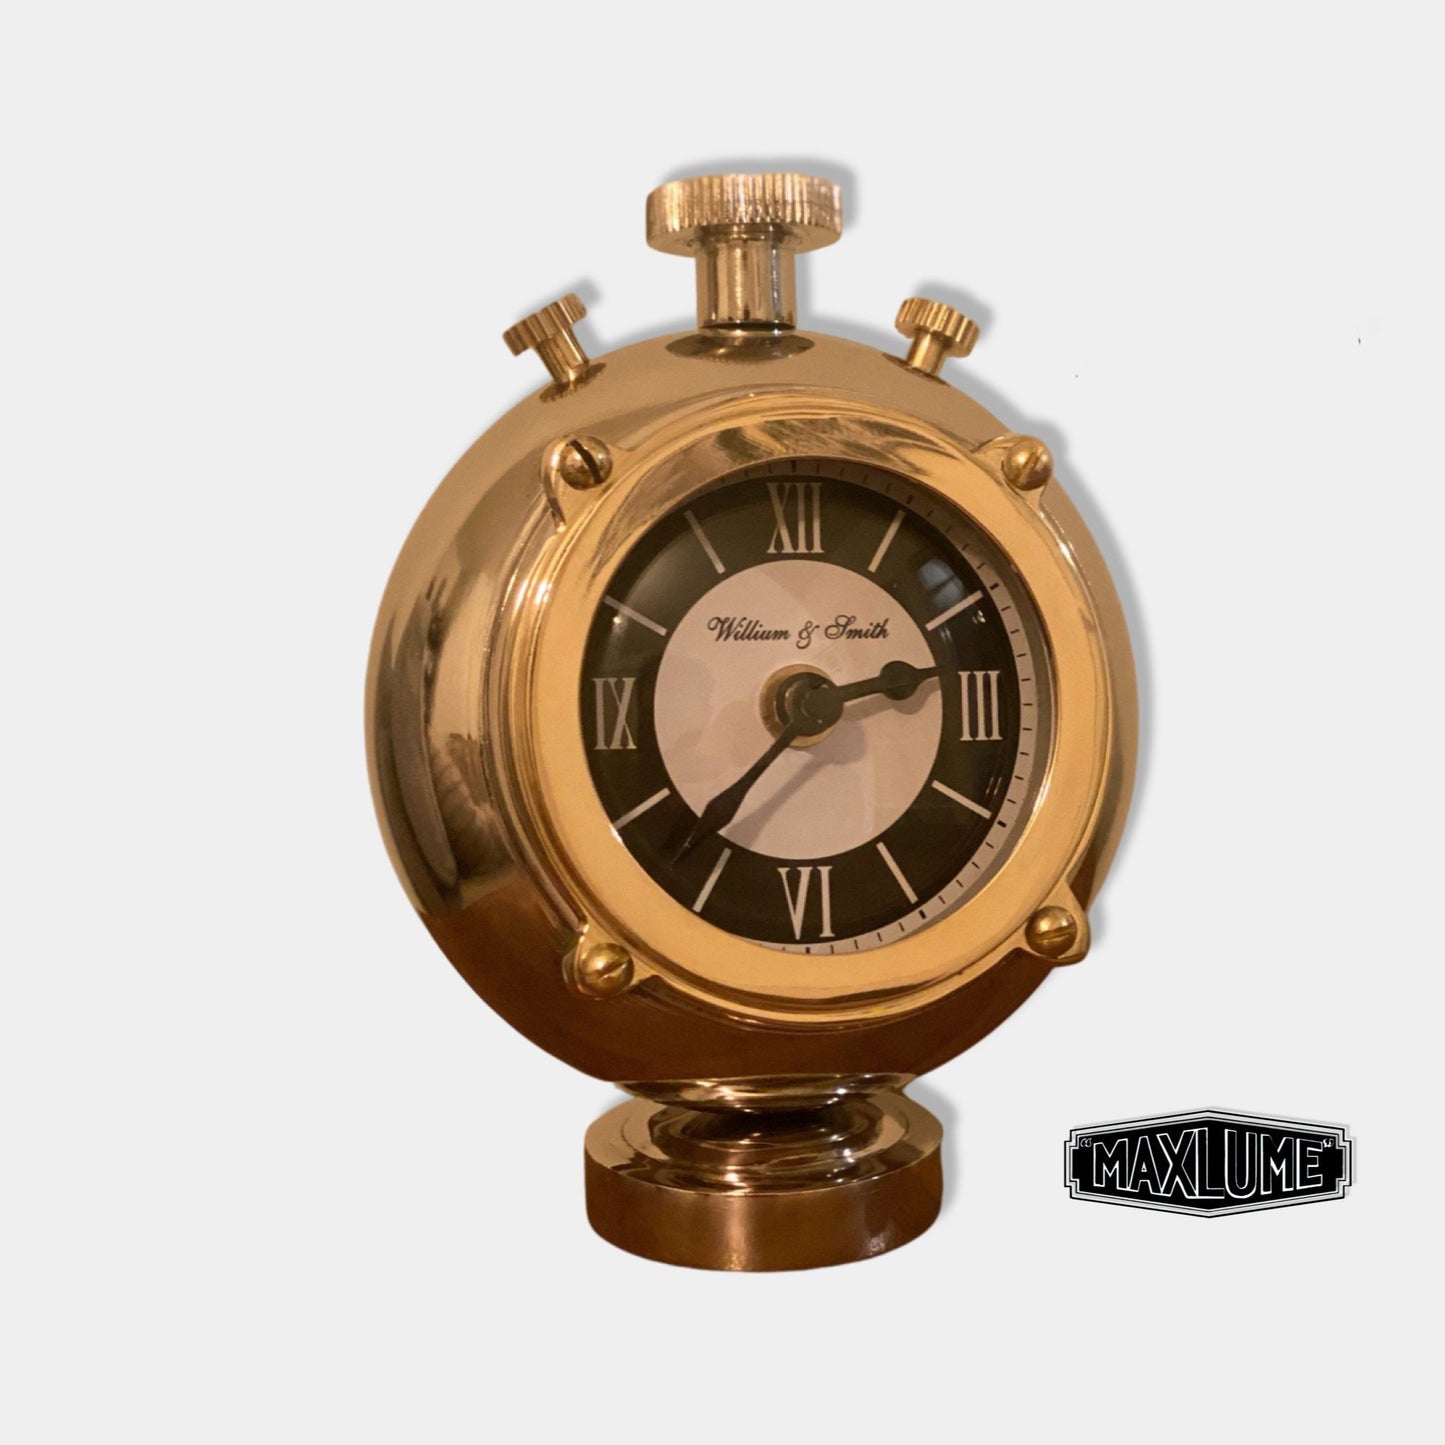 Maxlume ~ William & Smith Pocket Watch Table Clock Polished Nickel Solid Brass Ship Nautical Vintage Industrial Decor